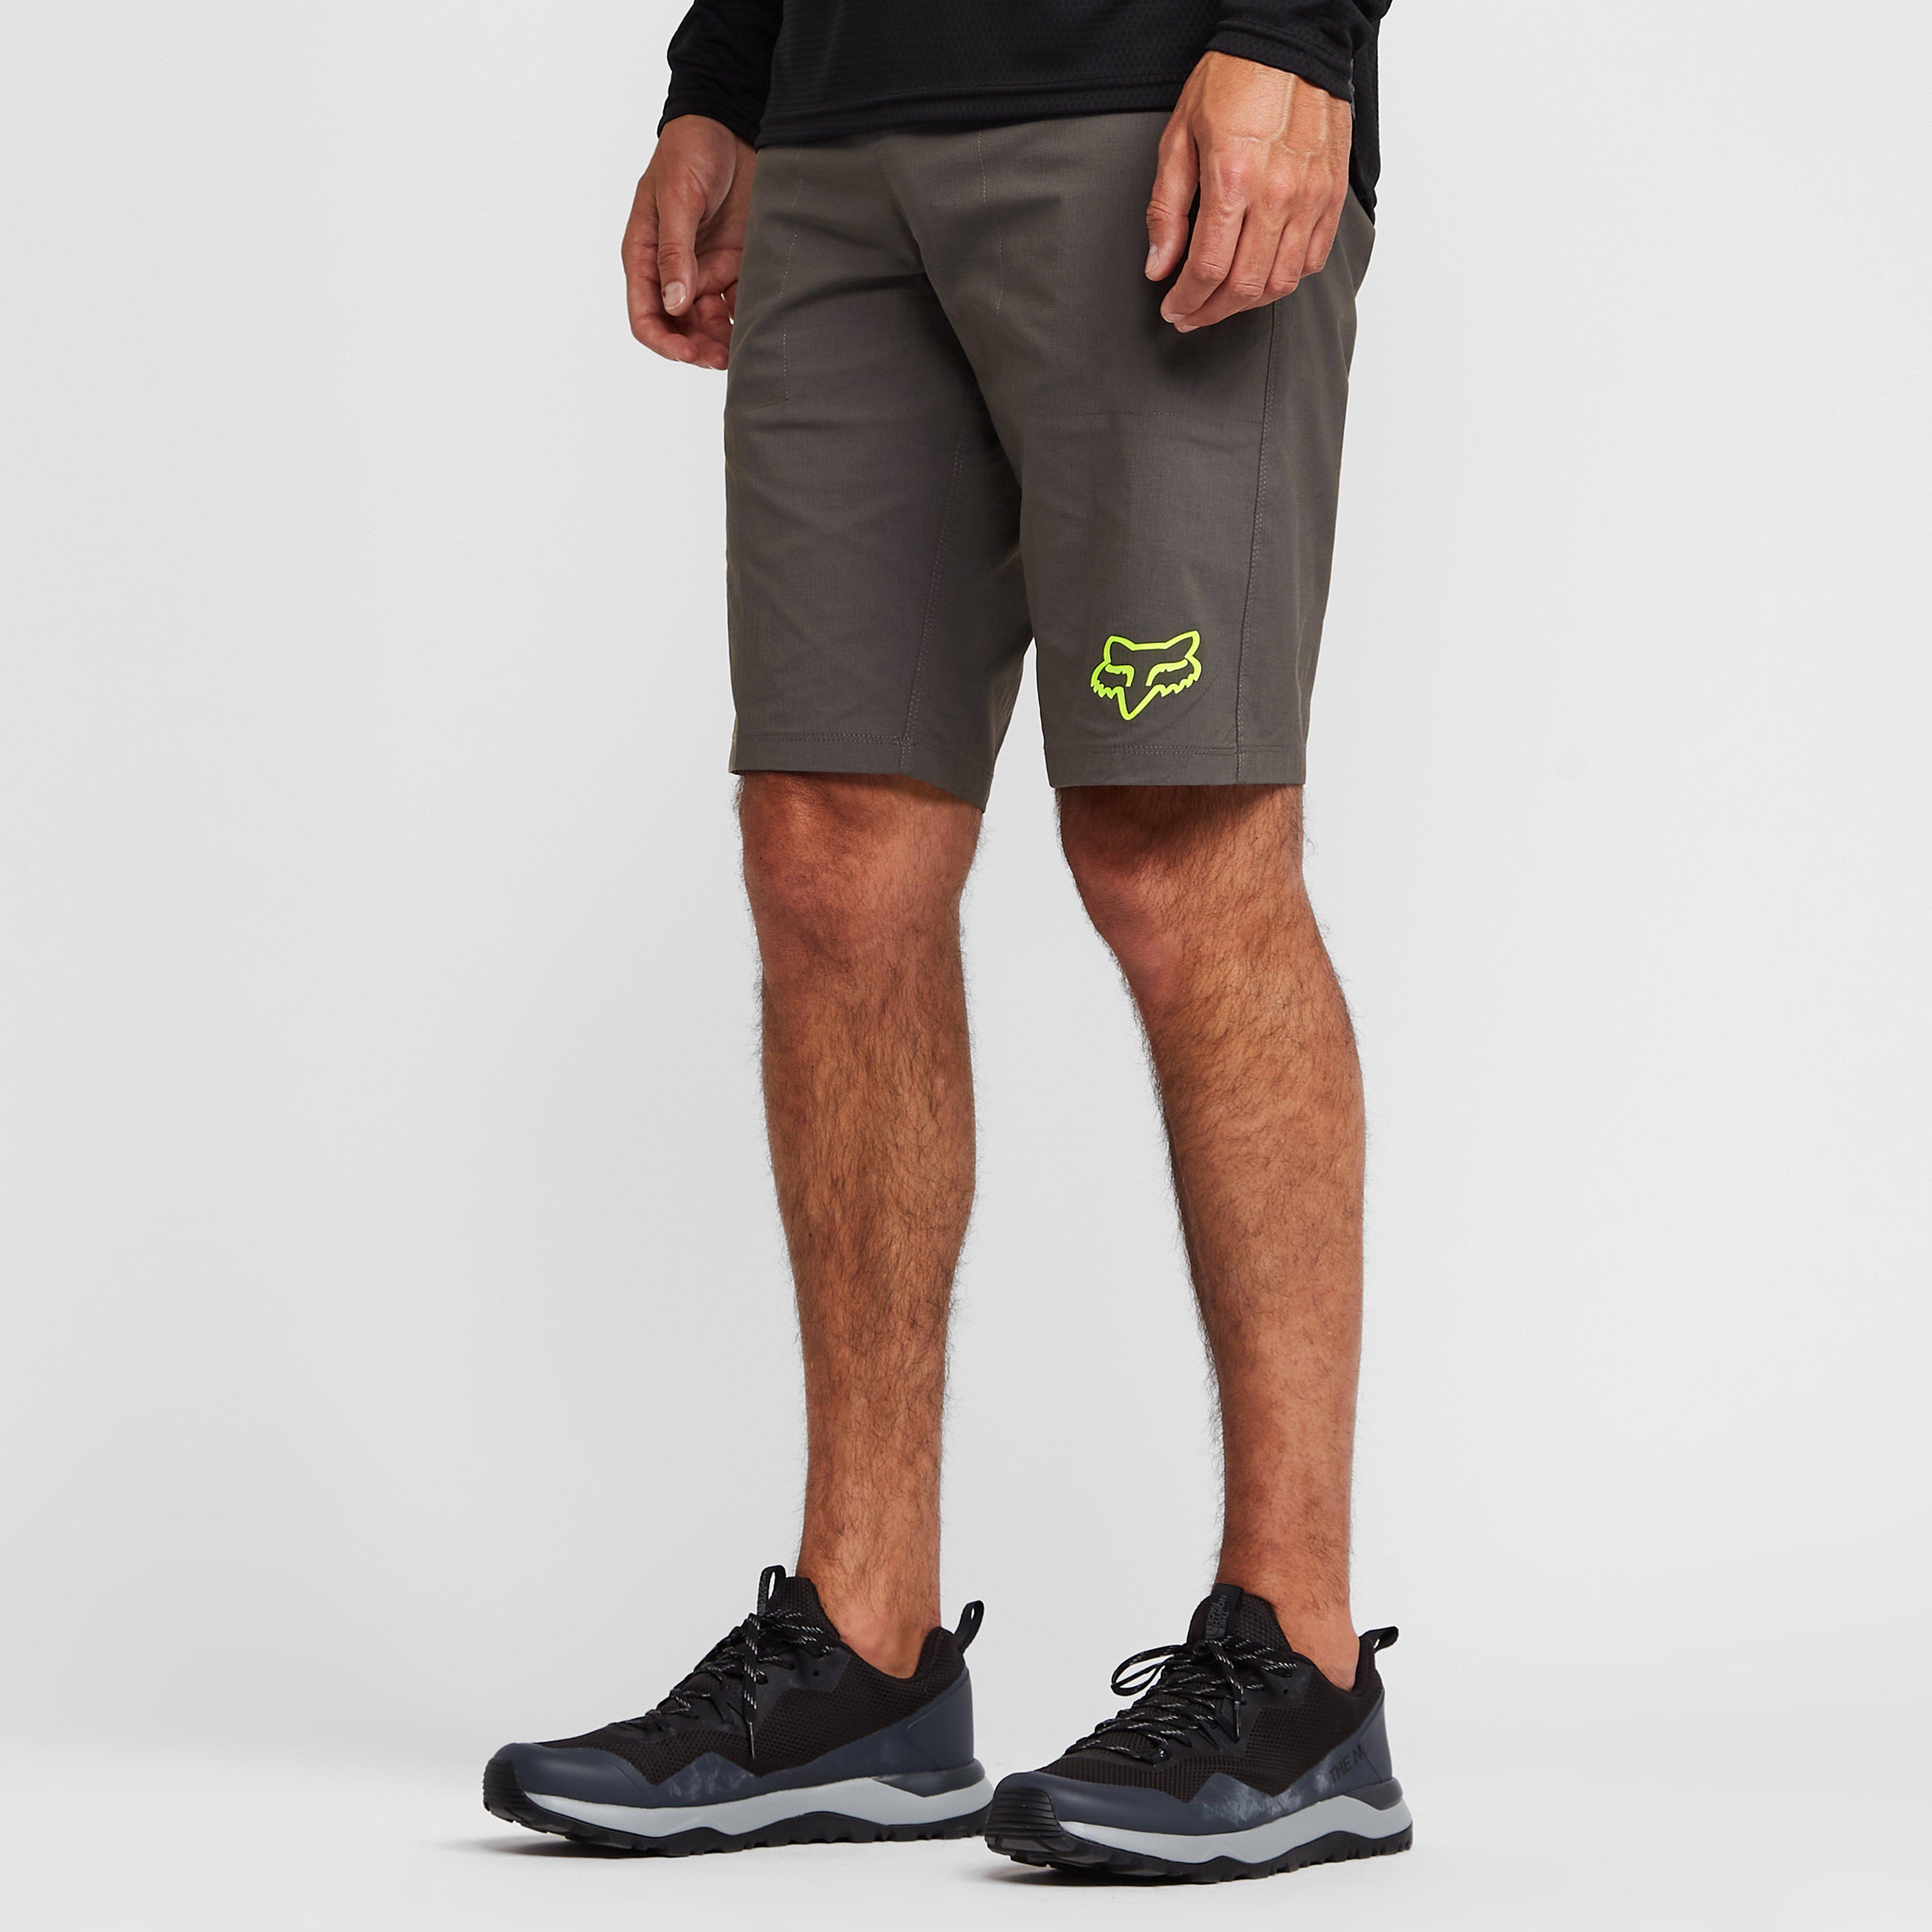 Image of Fox Men's Ranger Lite Shorts - Grey/Green, Grey/Green